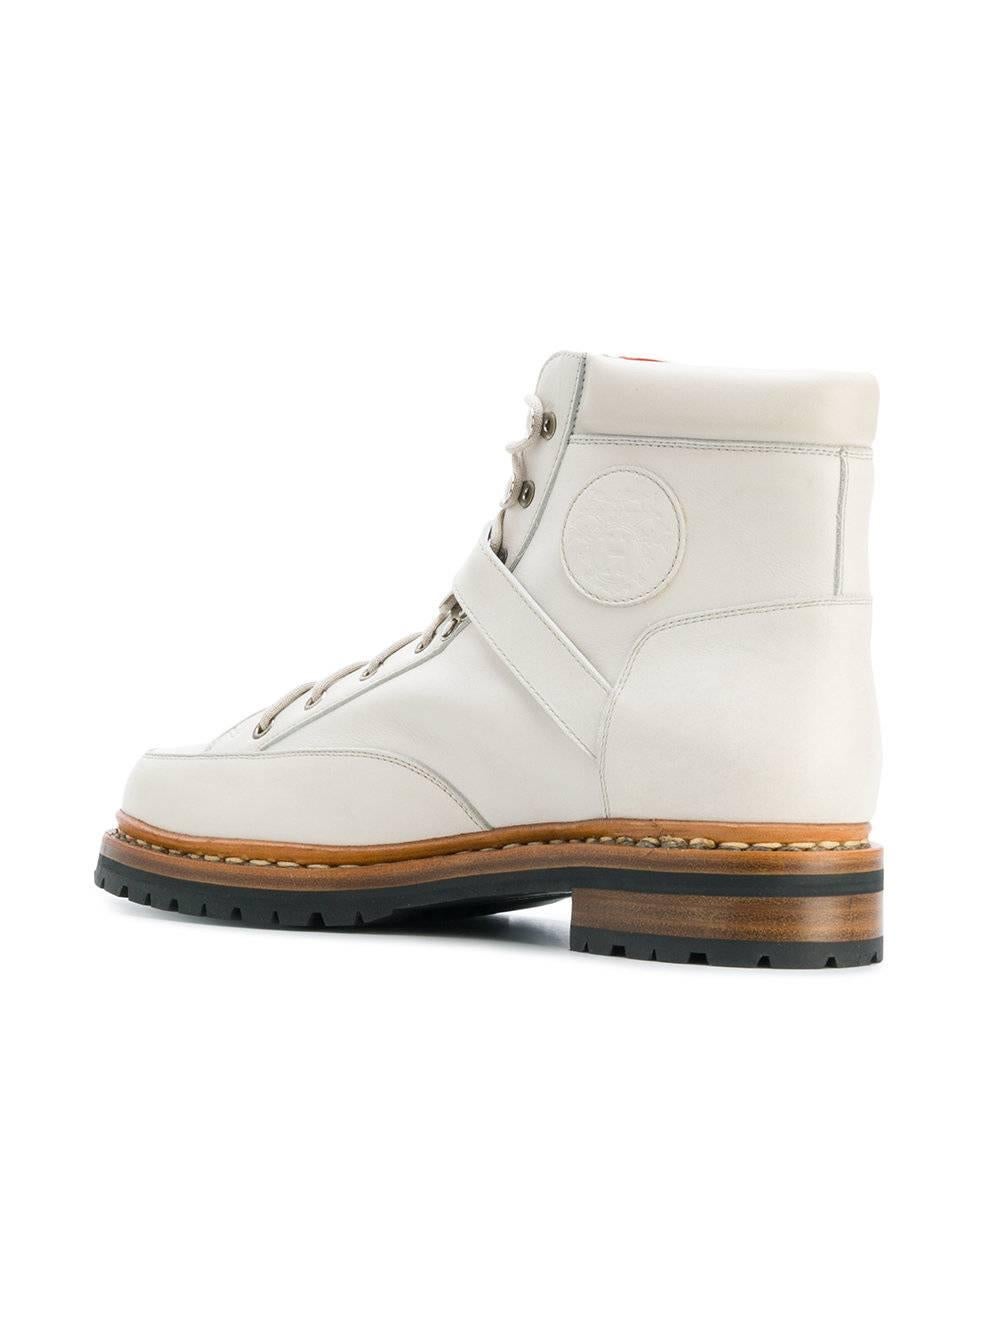 hermes white boots